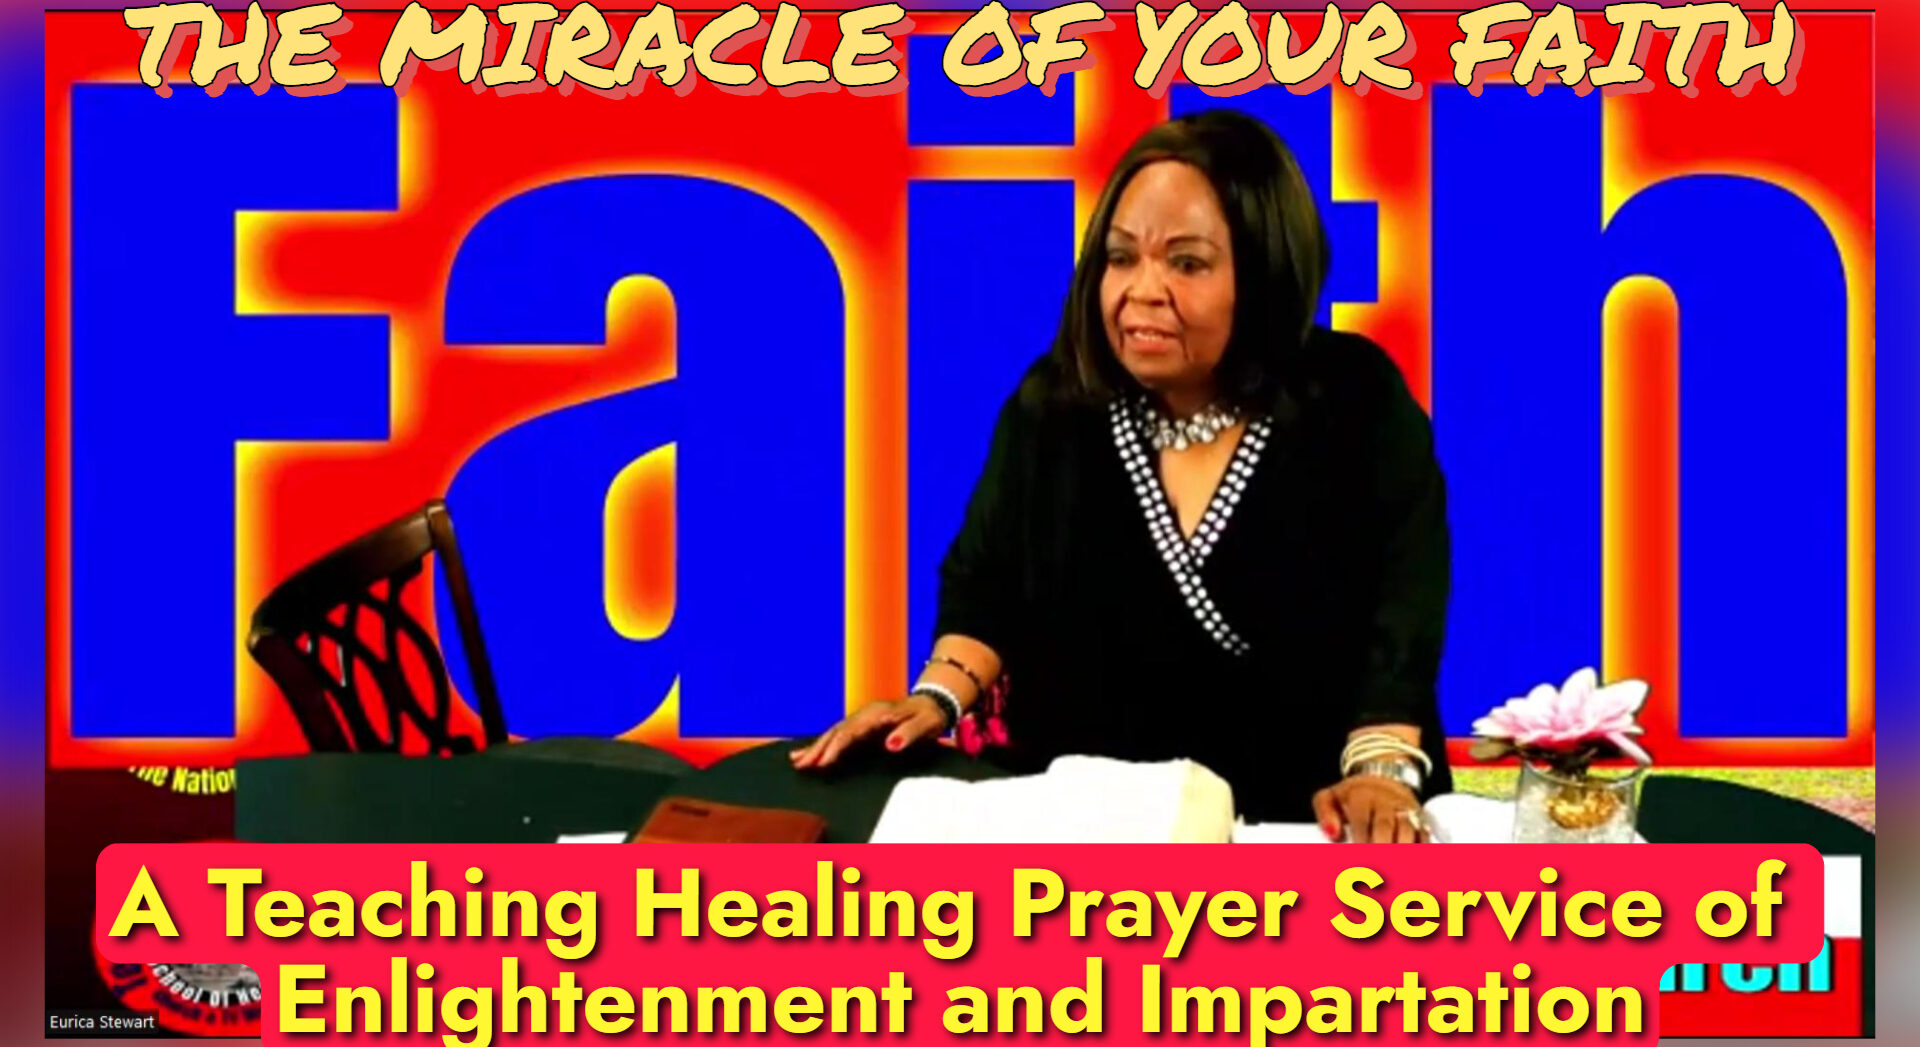 Teaching Healing Prayer Church - Image